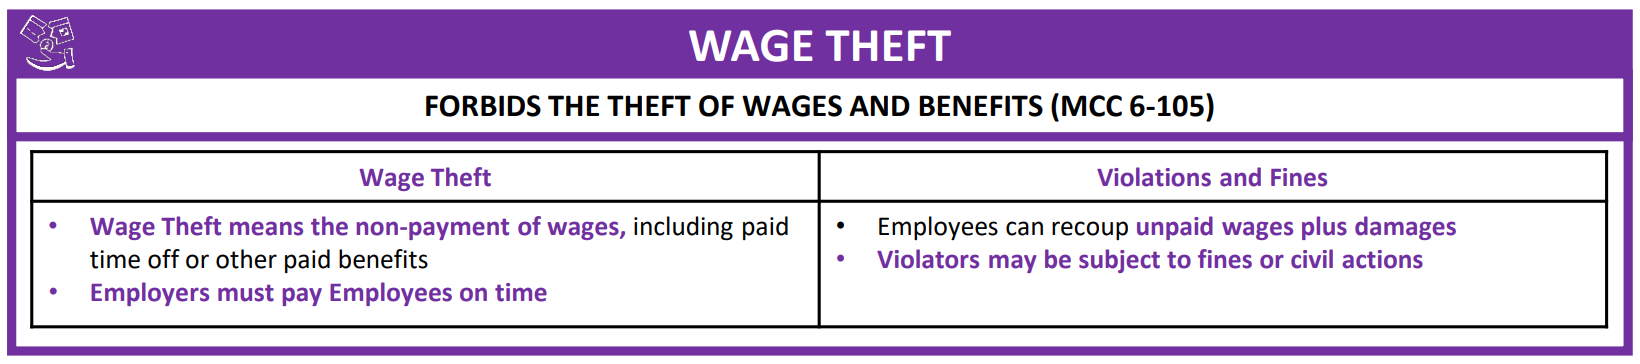 Wage Theft